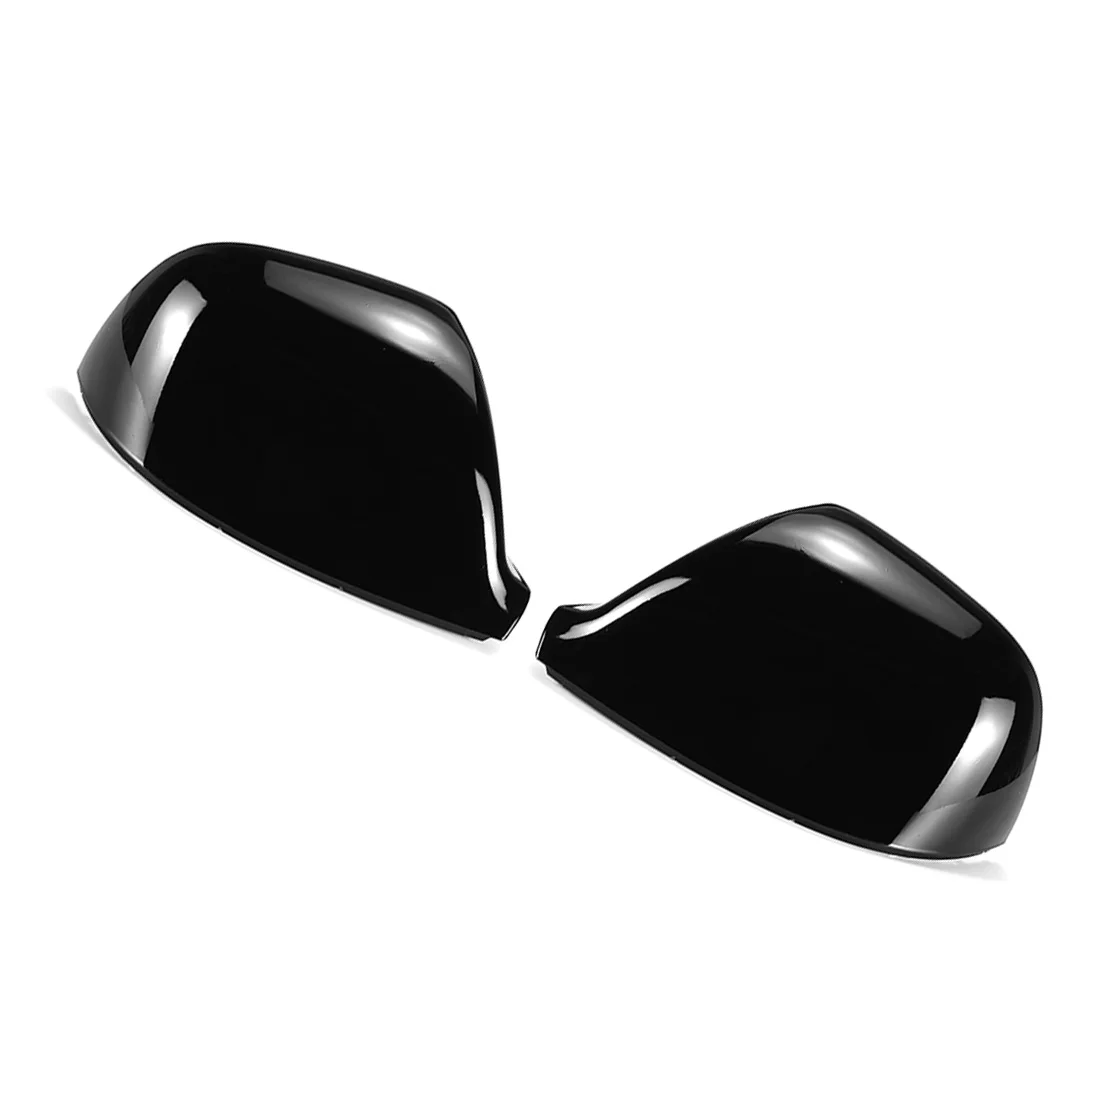 Parlak Siyah Ayna Kapakları Araba Yan Dikiz Kanat Ayna Yedek Kabuk Kapaklar-VW Transporter T5 T5.1 T6 2010-2019